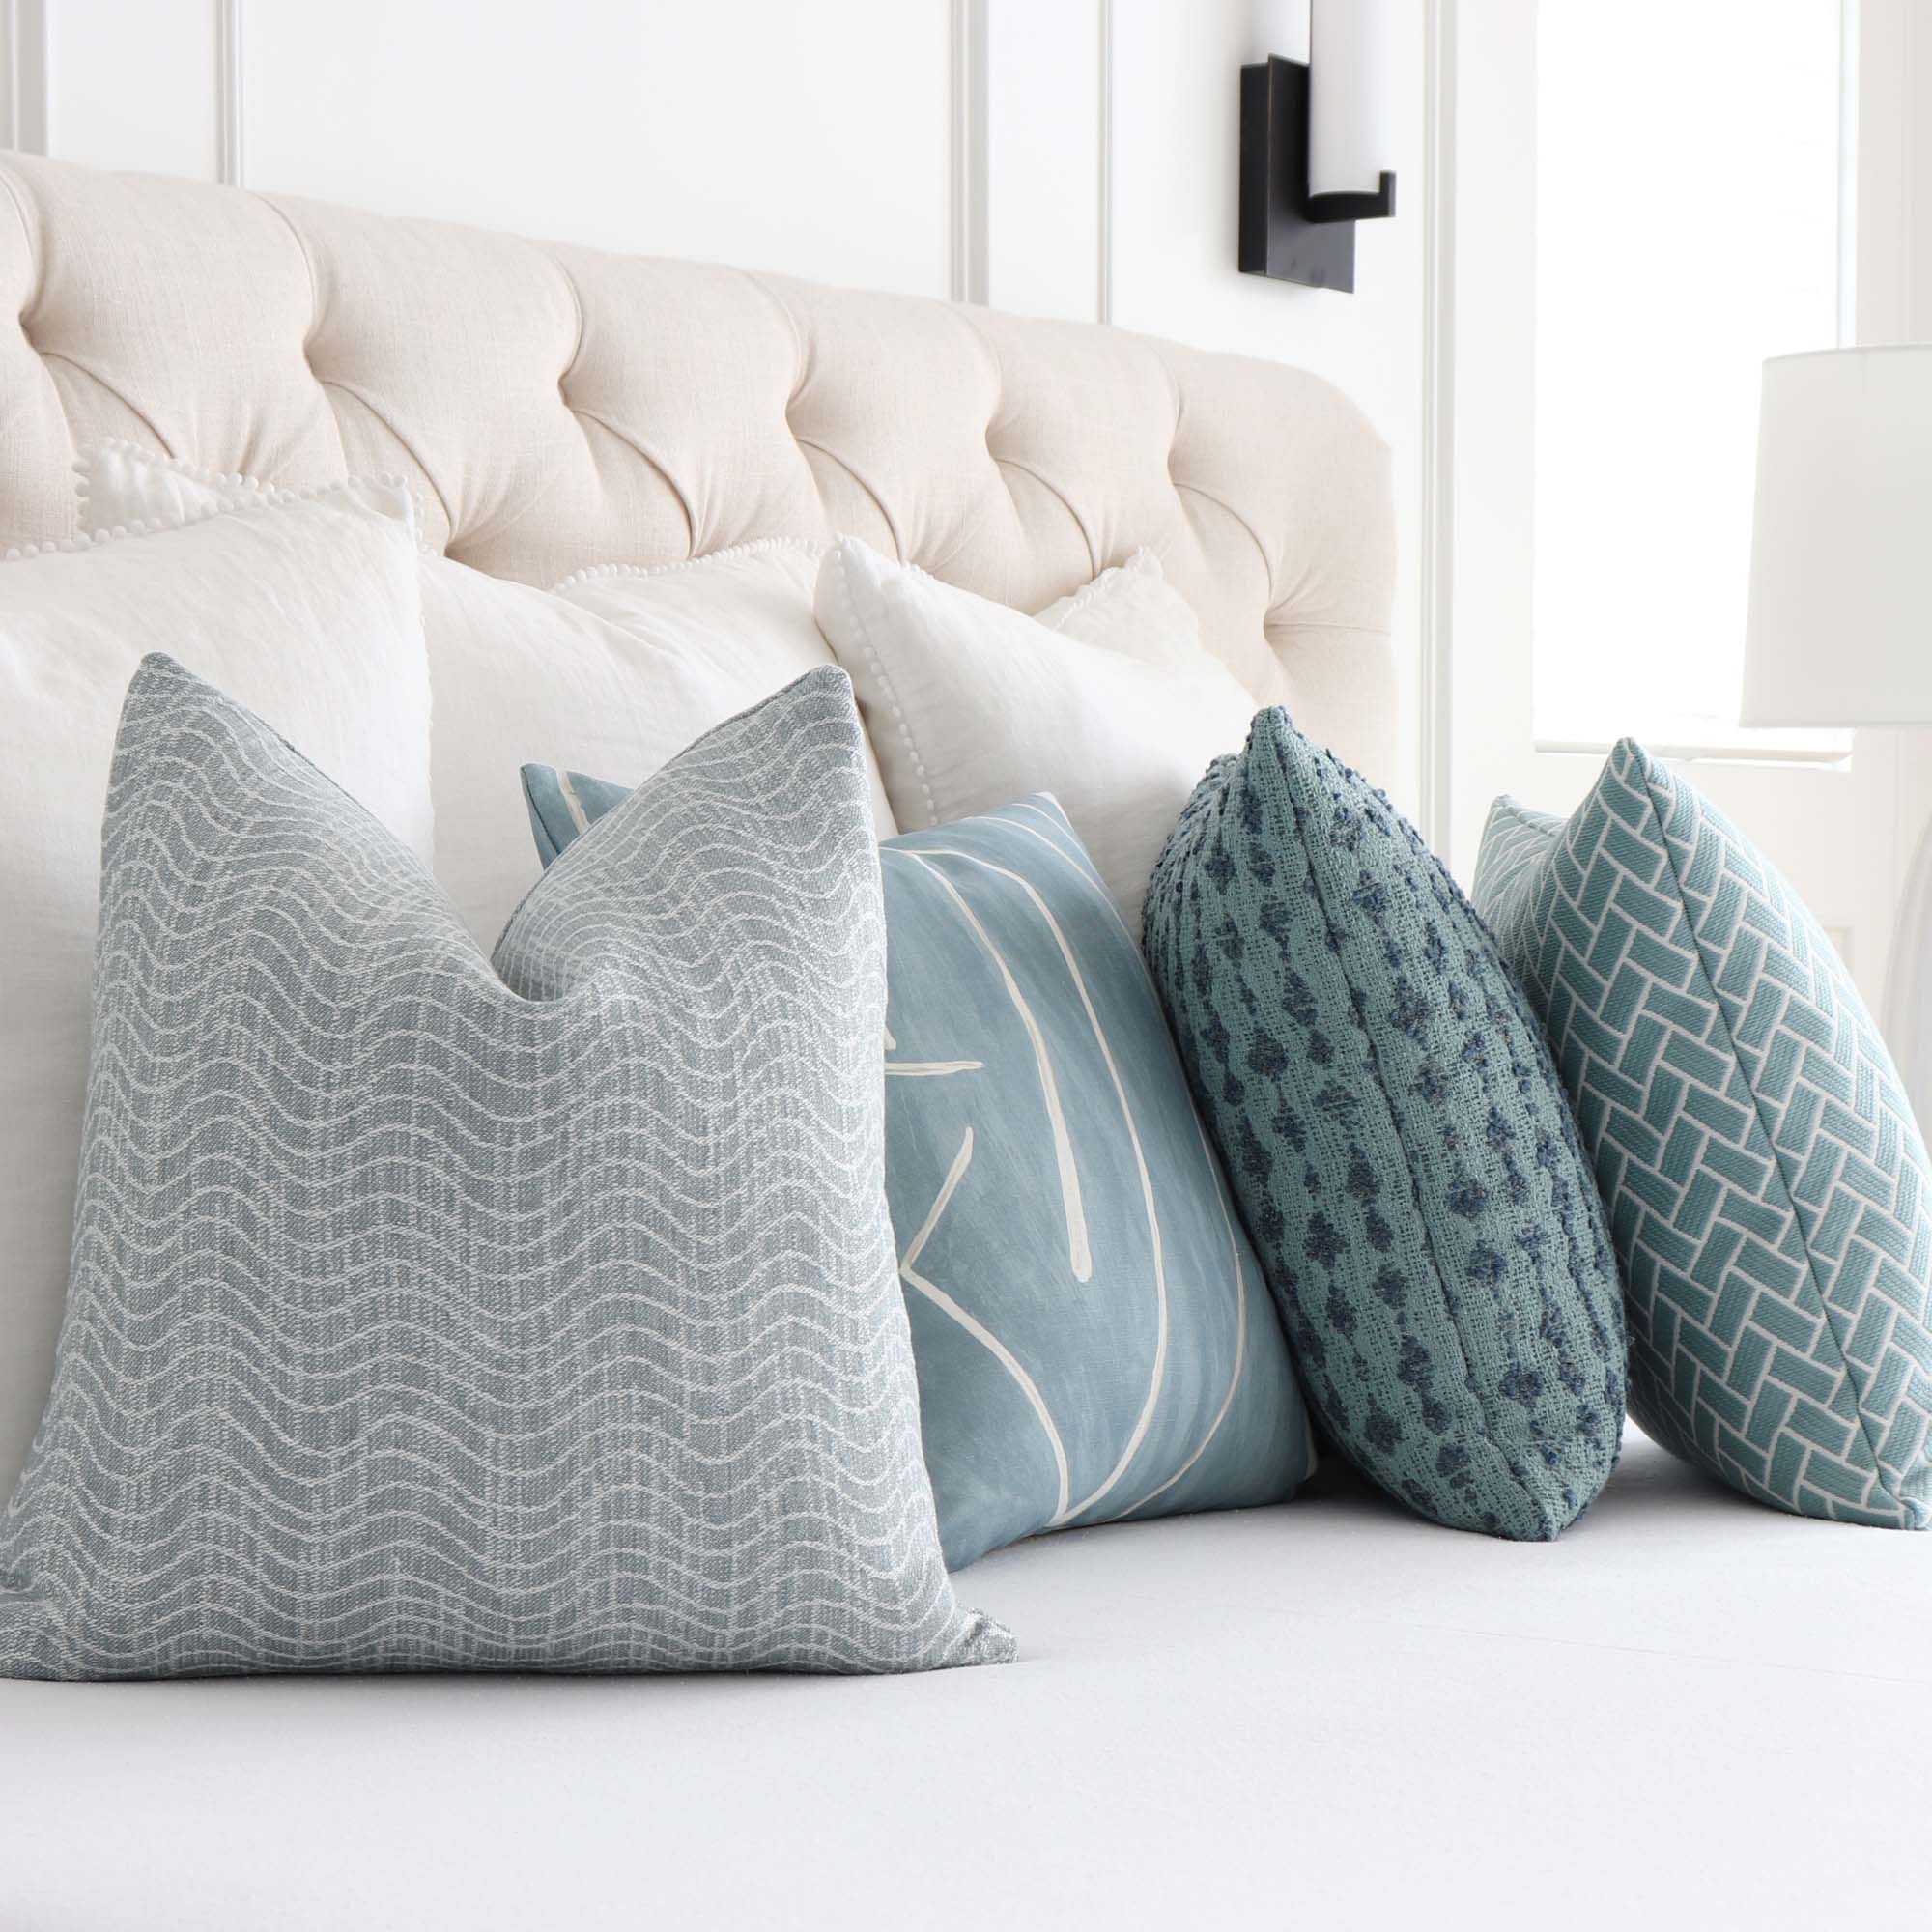 Kelly Wearstler Lee Jofa Dadami Pool Blue Woven Linen Striped Designer Throw Pillow Cover